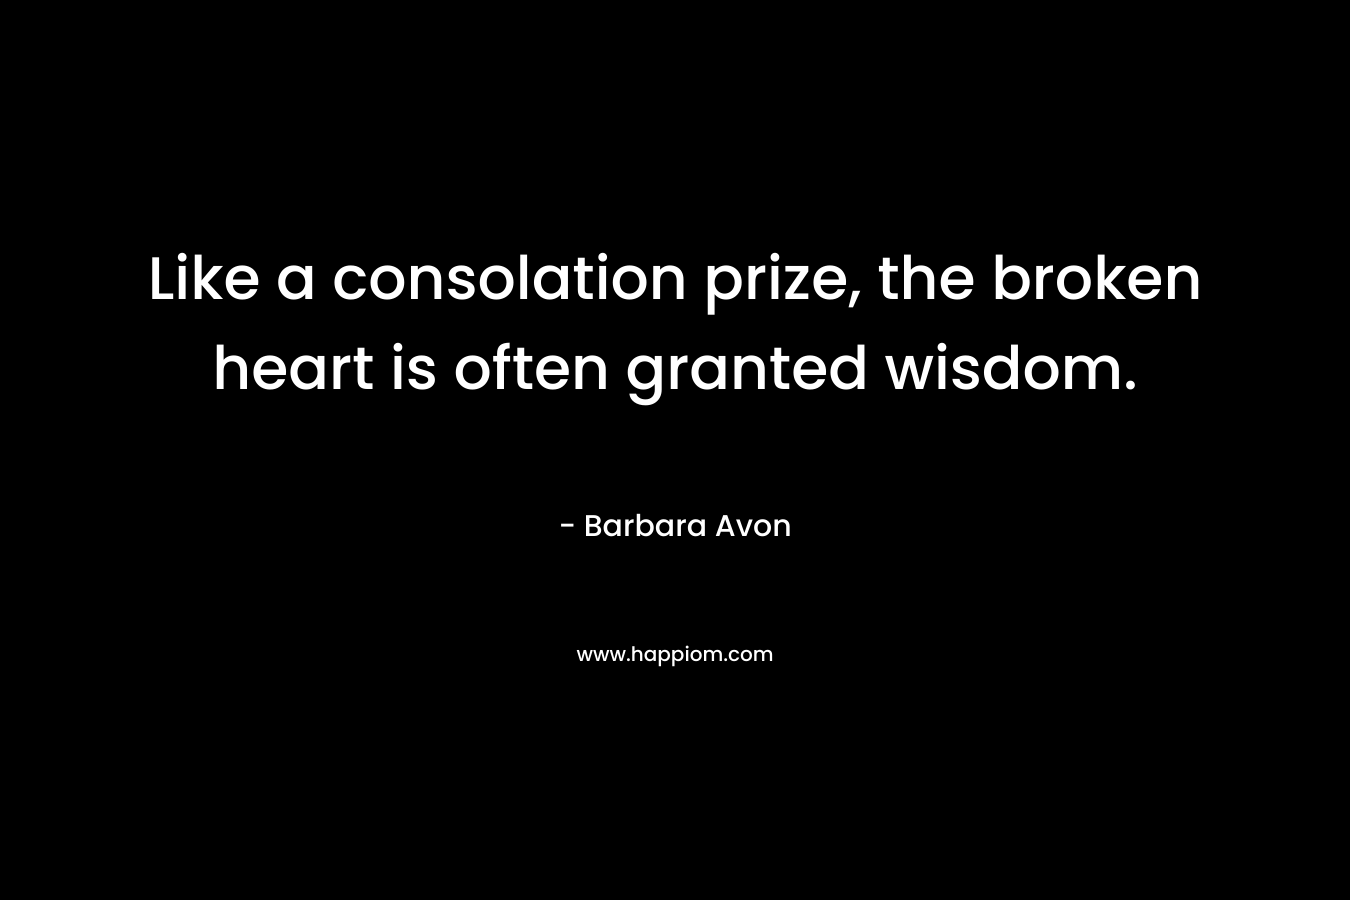 Like a consolation prize, the broken heart is often granted wisdom. – Barbara Avon